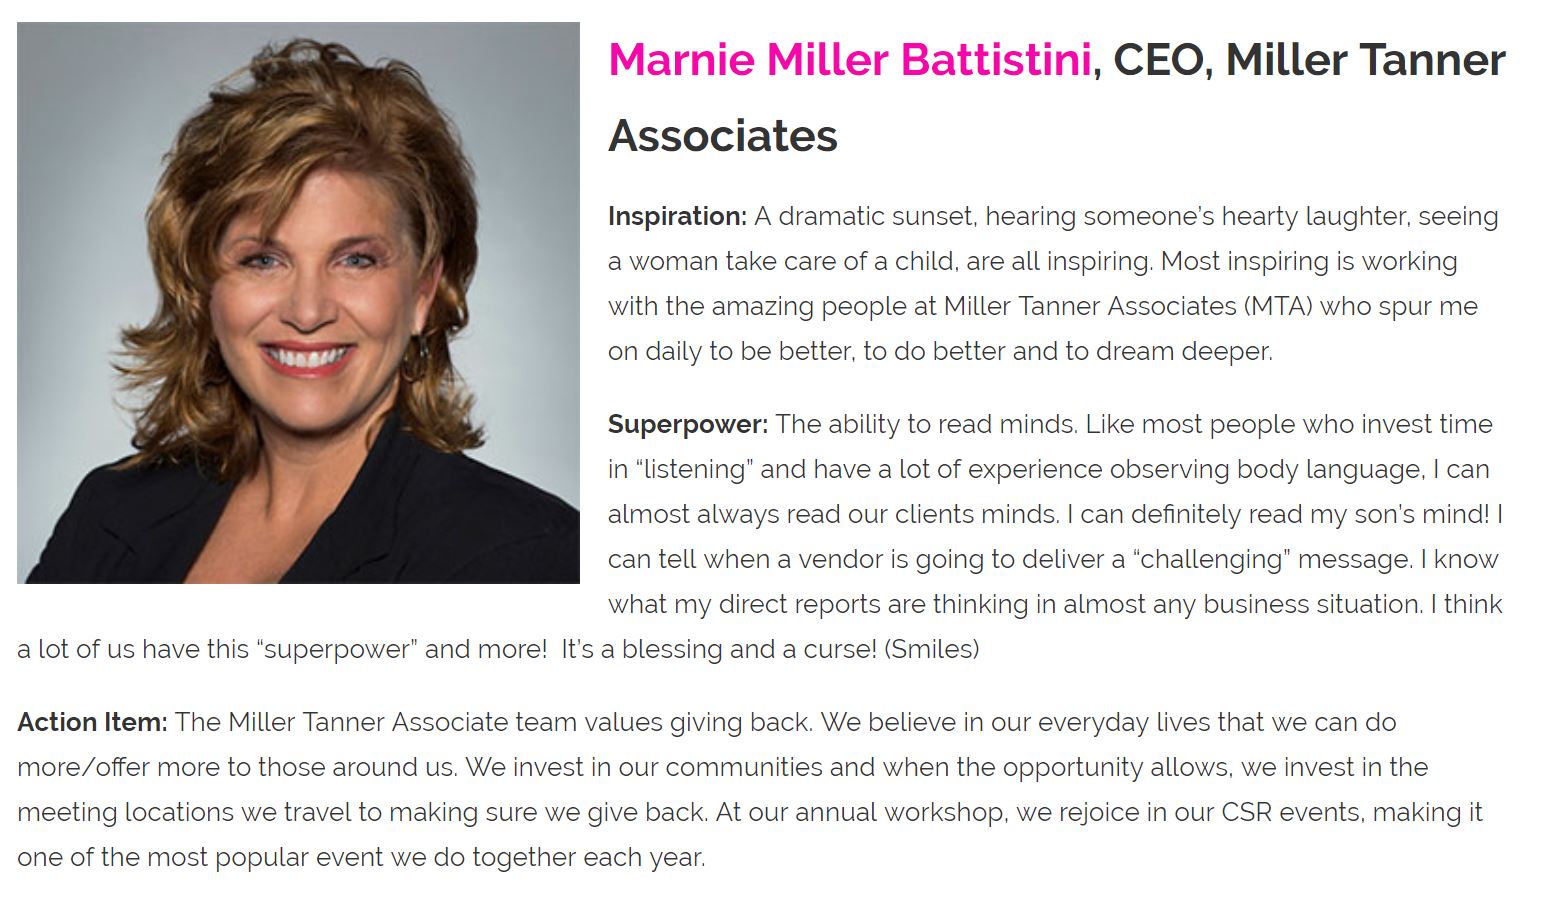 Marnie Miller Battistini, 2018 Smart Women in Meetings Awards winner.